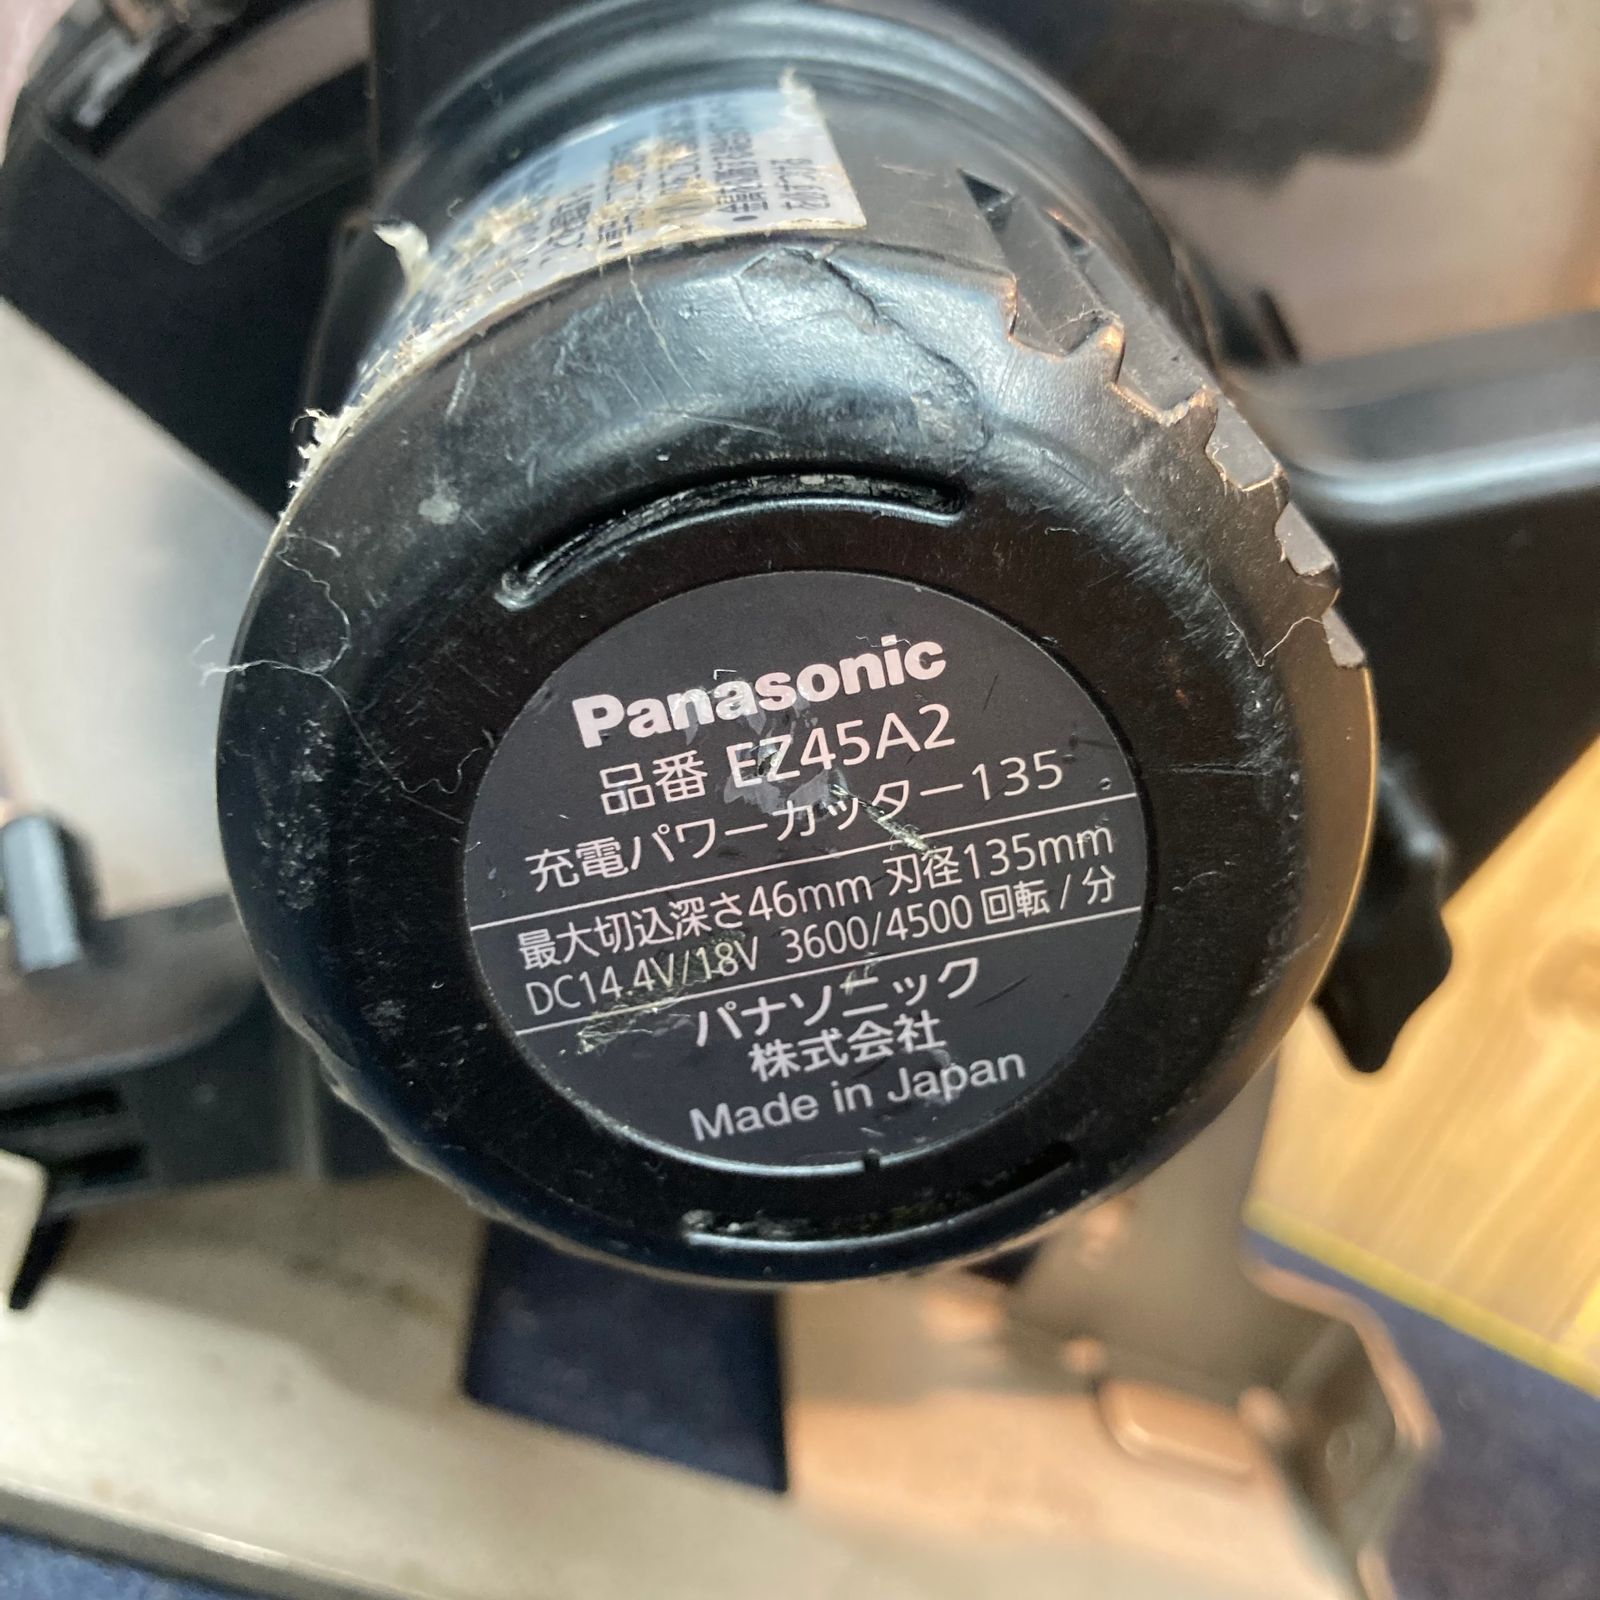 Panasonic 充電パワーカッター135 EZ45A2 18V4.2Ahバッテリー1個付き